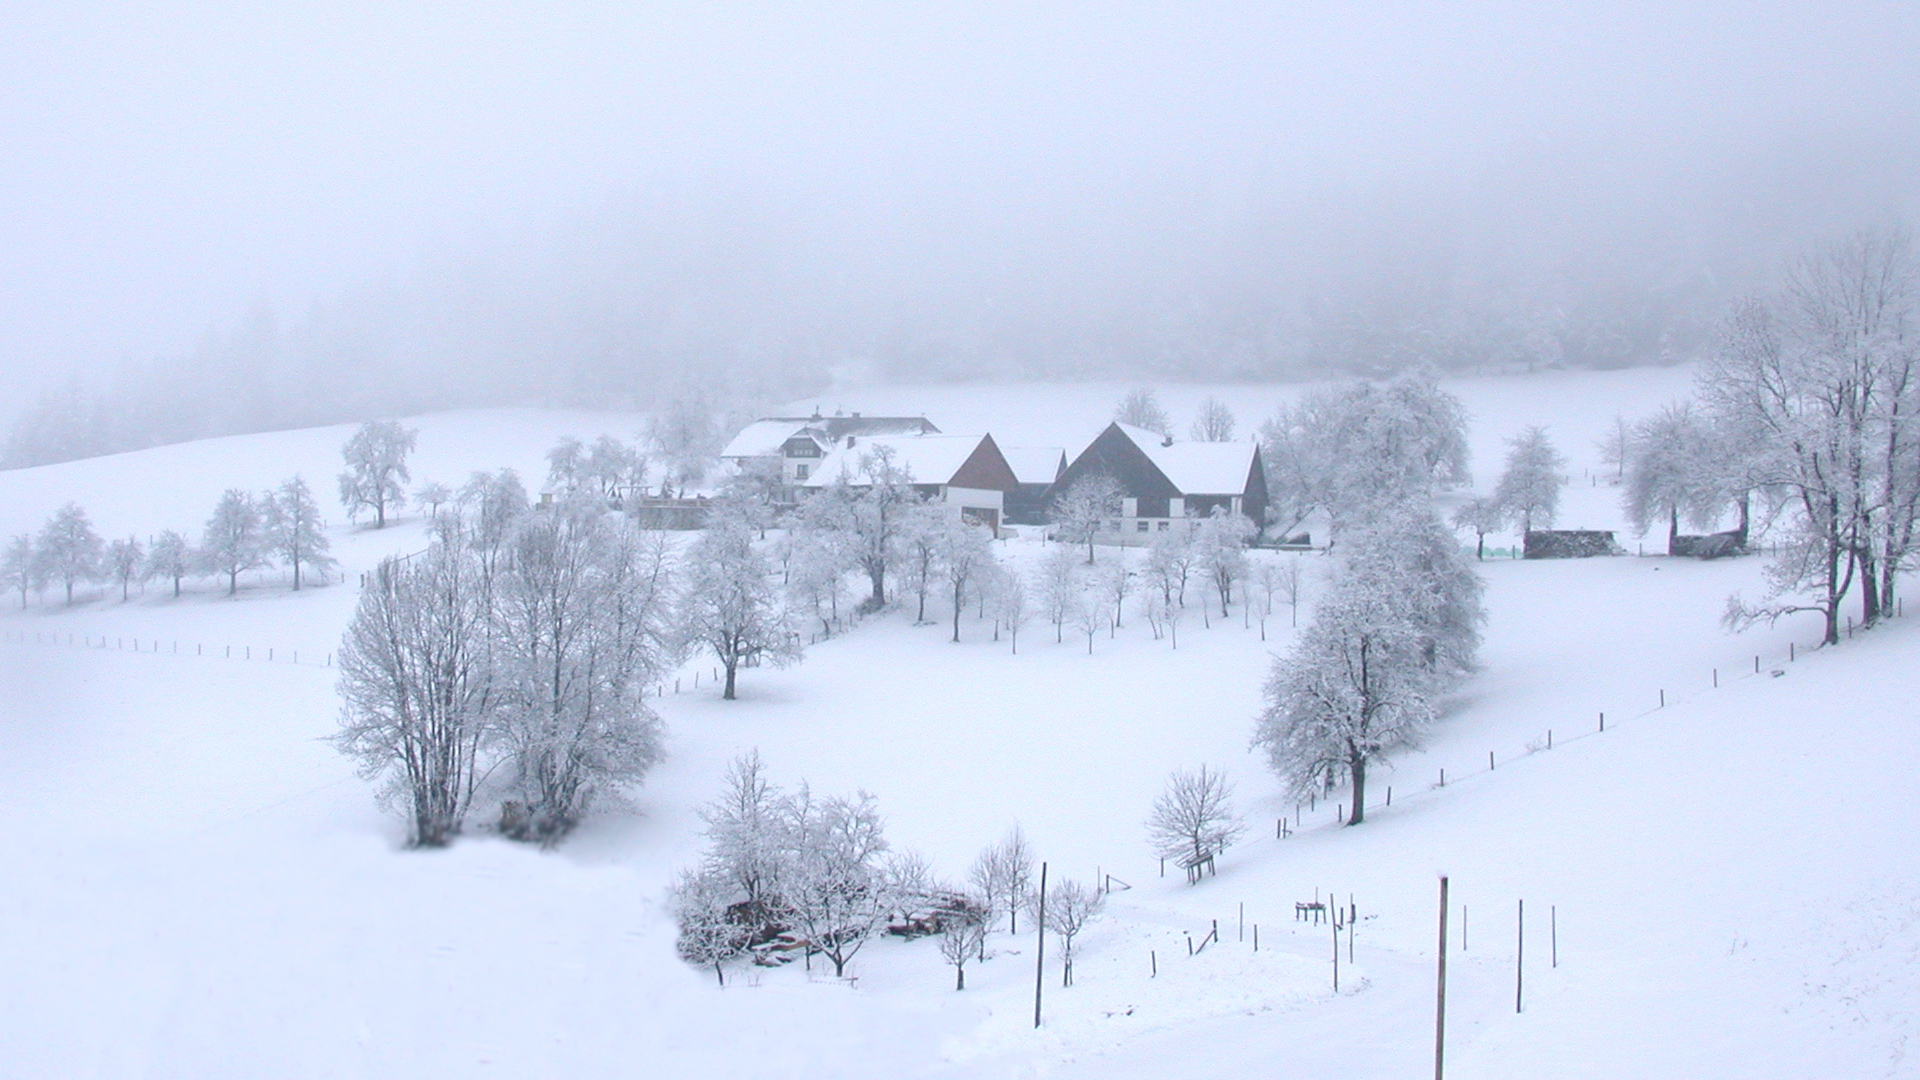 Fotostrecke Winter Abbildung 01: Gasthof Pension Moosgierler im Winter; Edlbach, Oberösterreich